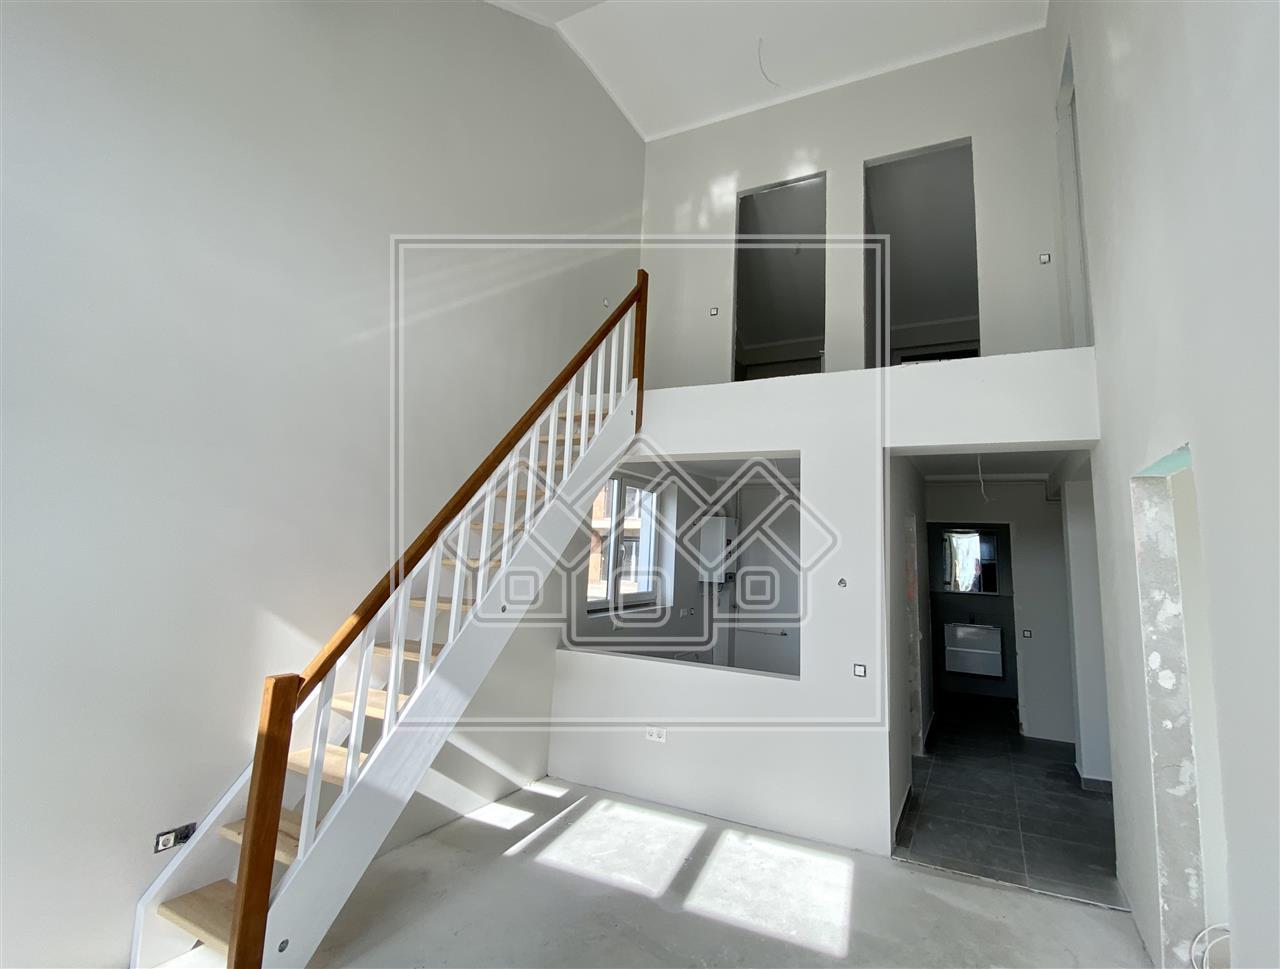 Penthouse pe 2 niveluri - 4 camere si balcon - confort lux (L)